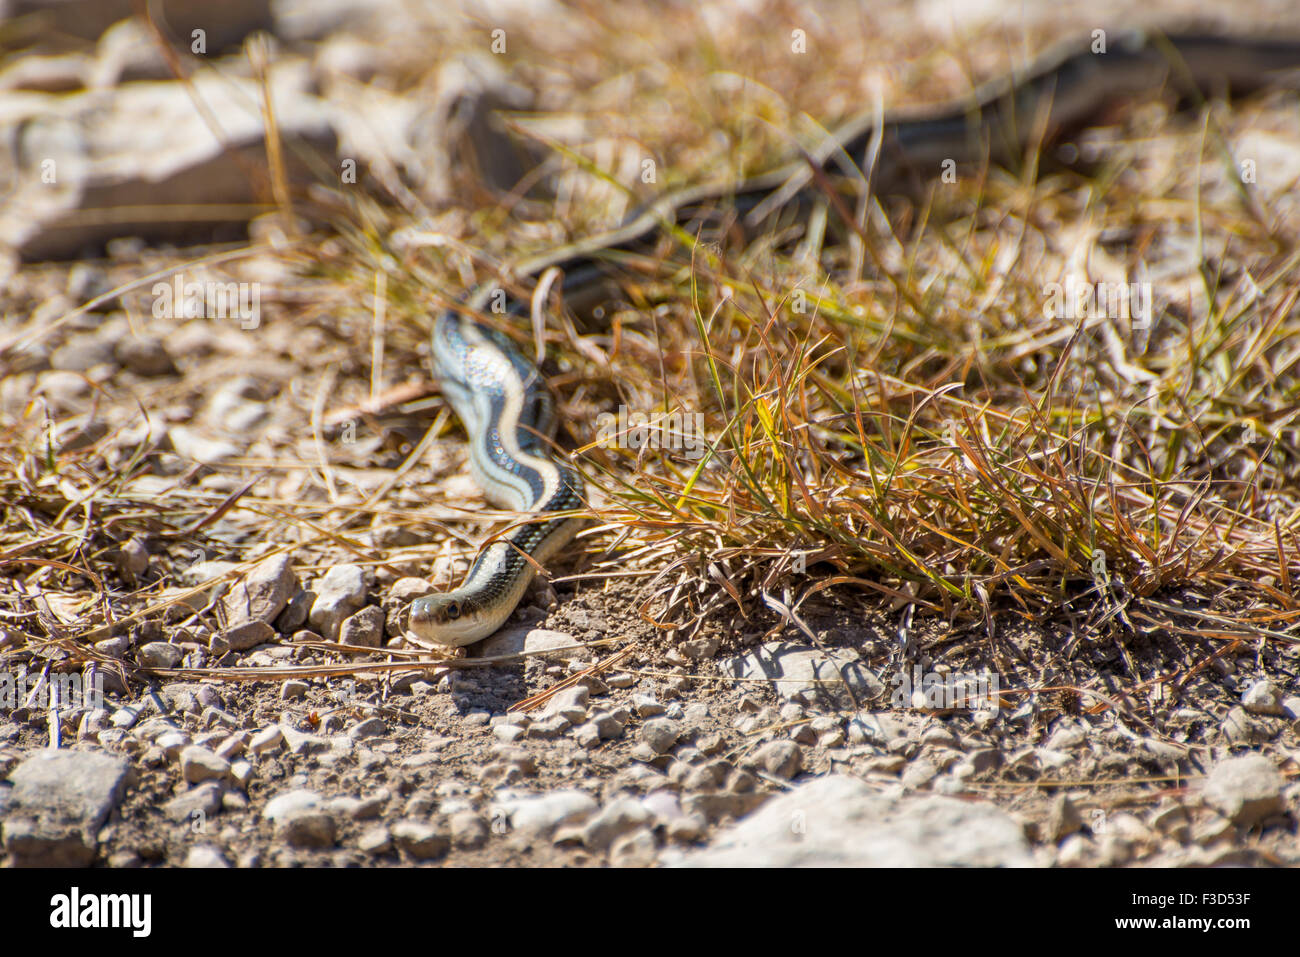 Wild South Texas garter snake slithering attraverso l'erba Foto Stock